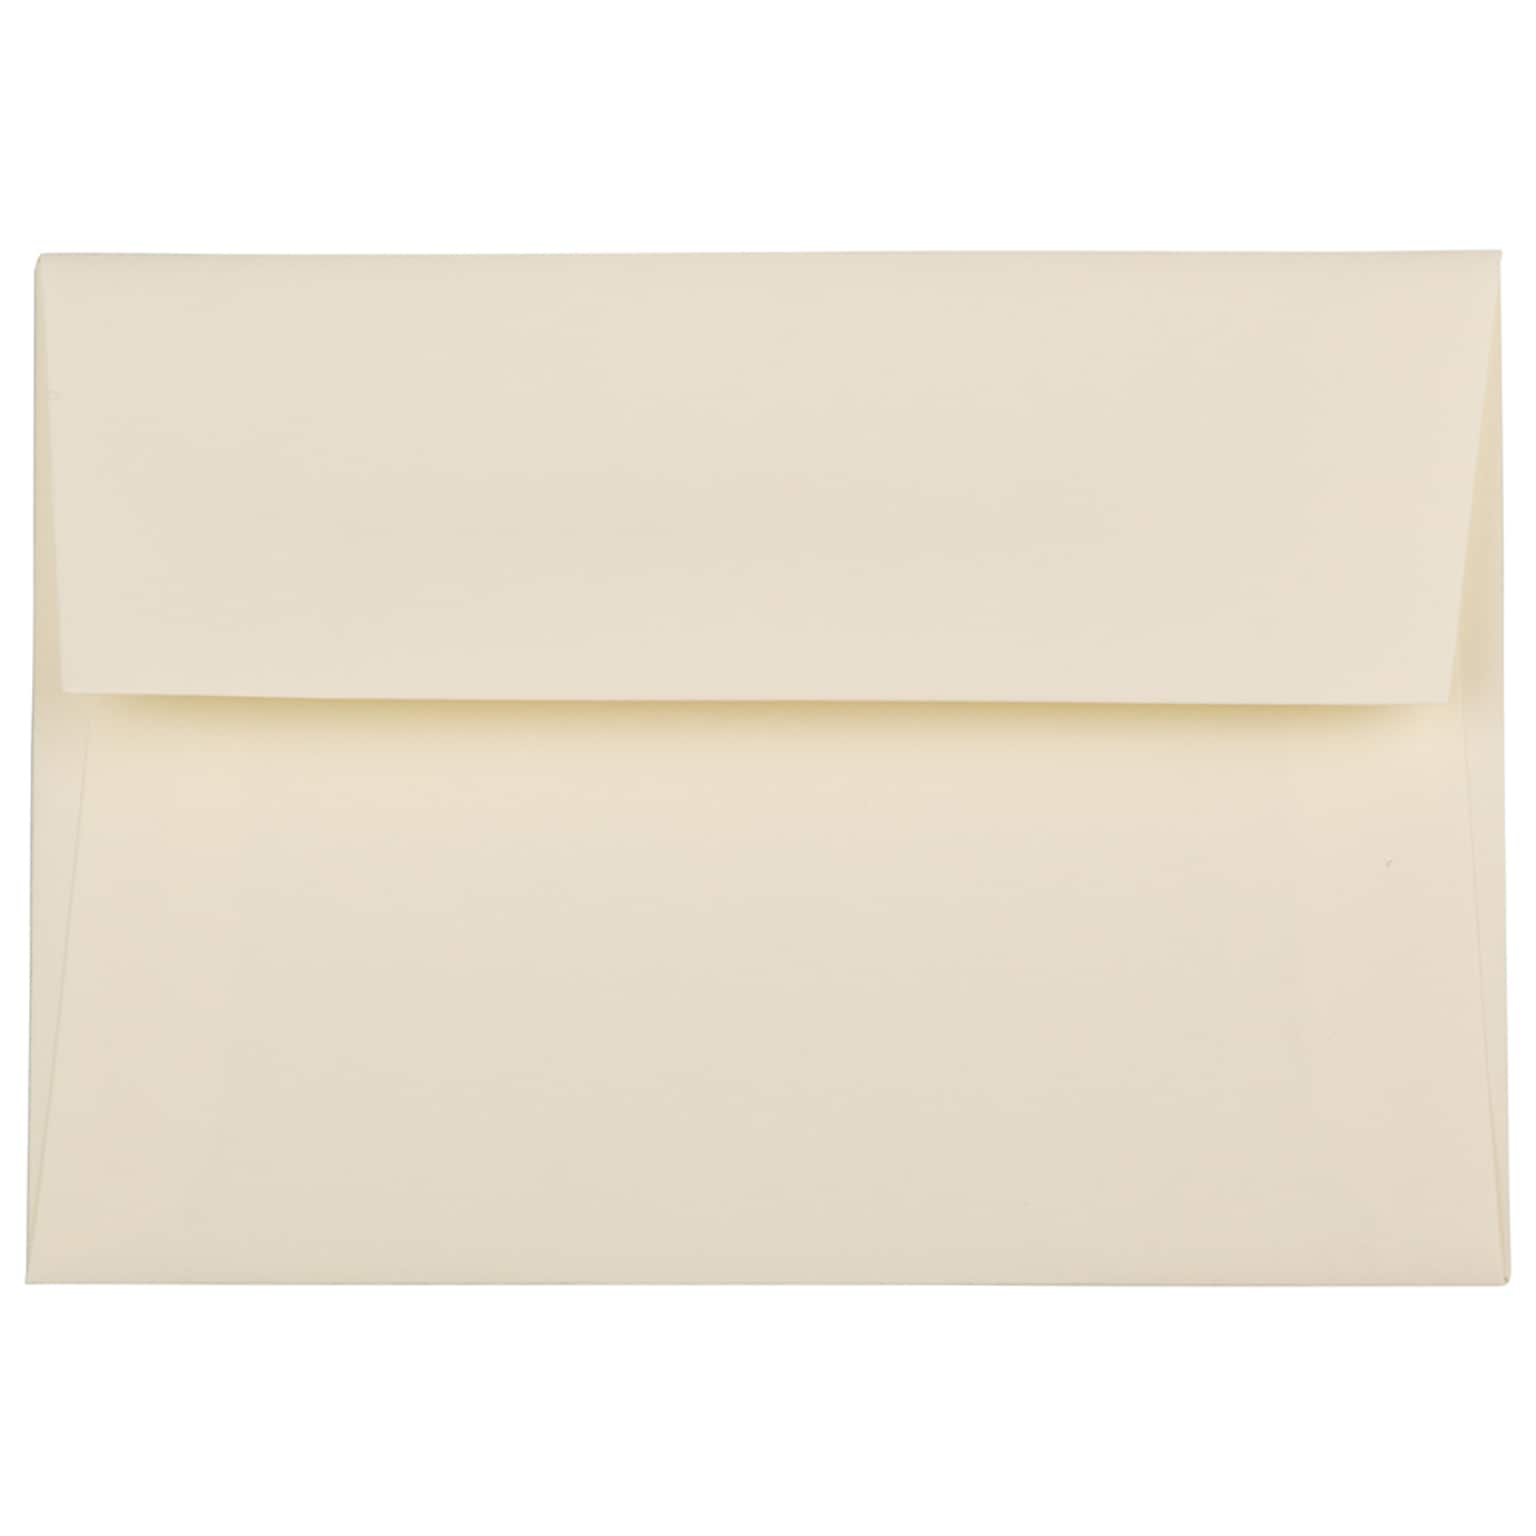 JAM Paper 4Bar A1 Strathmore Invitation Envelopes, 3.625 x 5.125, Ivory Wove, Bulk 250/Box (191133H)